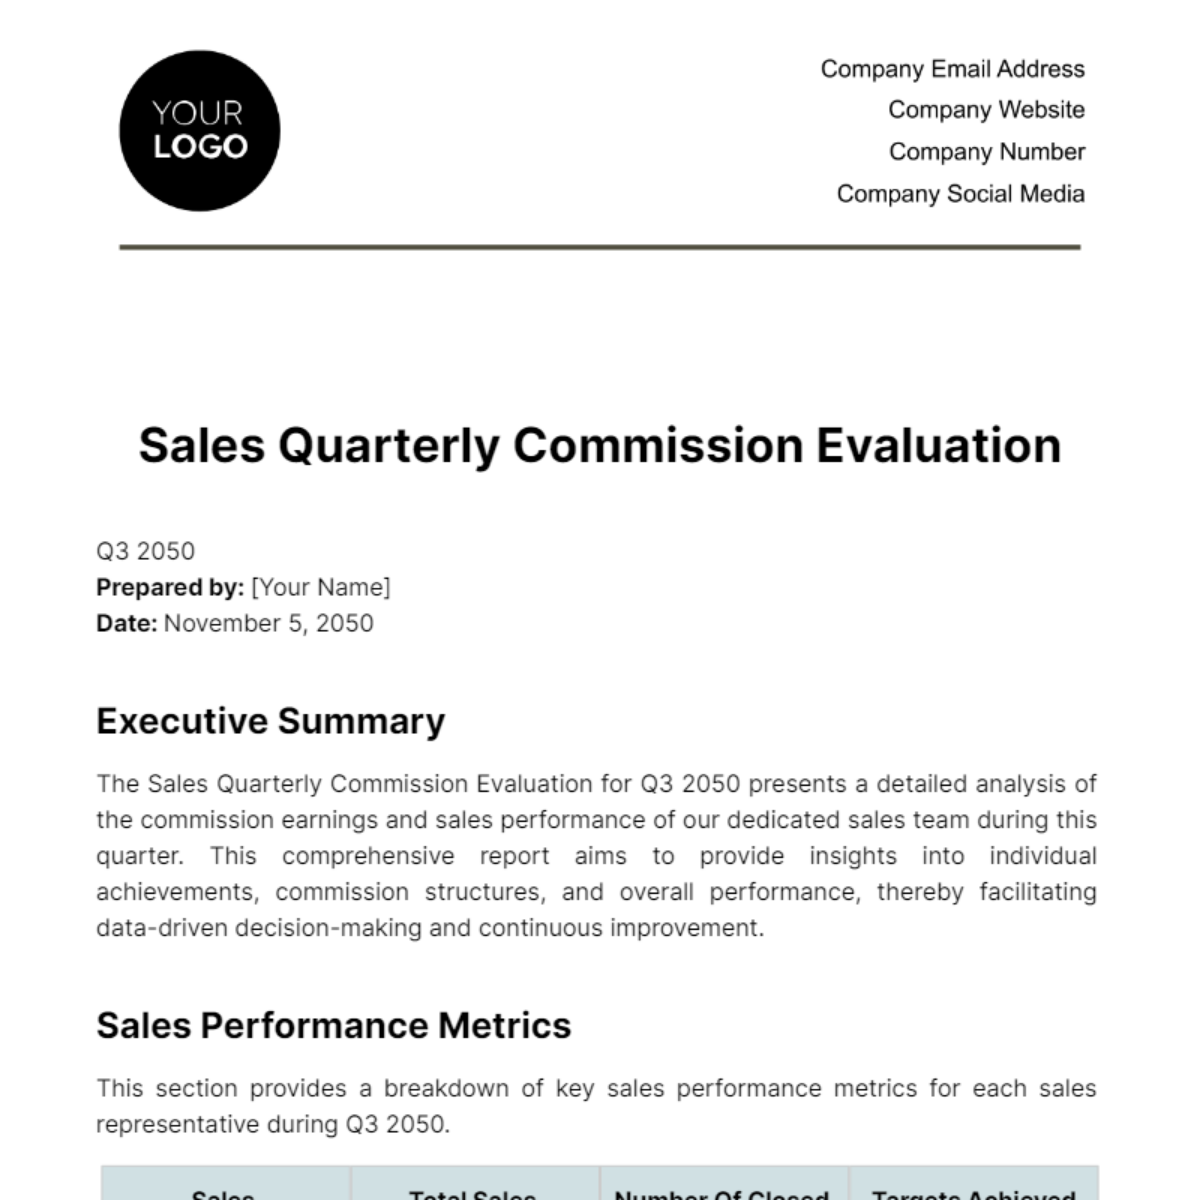 Sales Quarterly Commission Evaluation Template